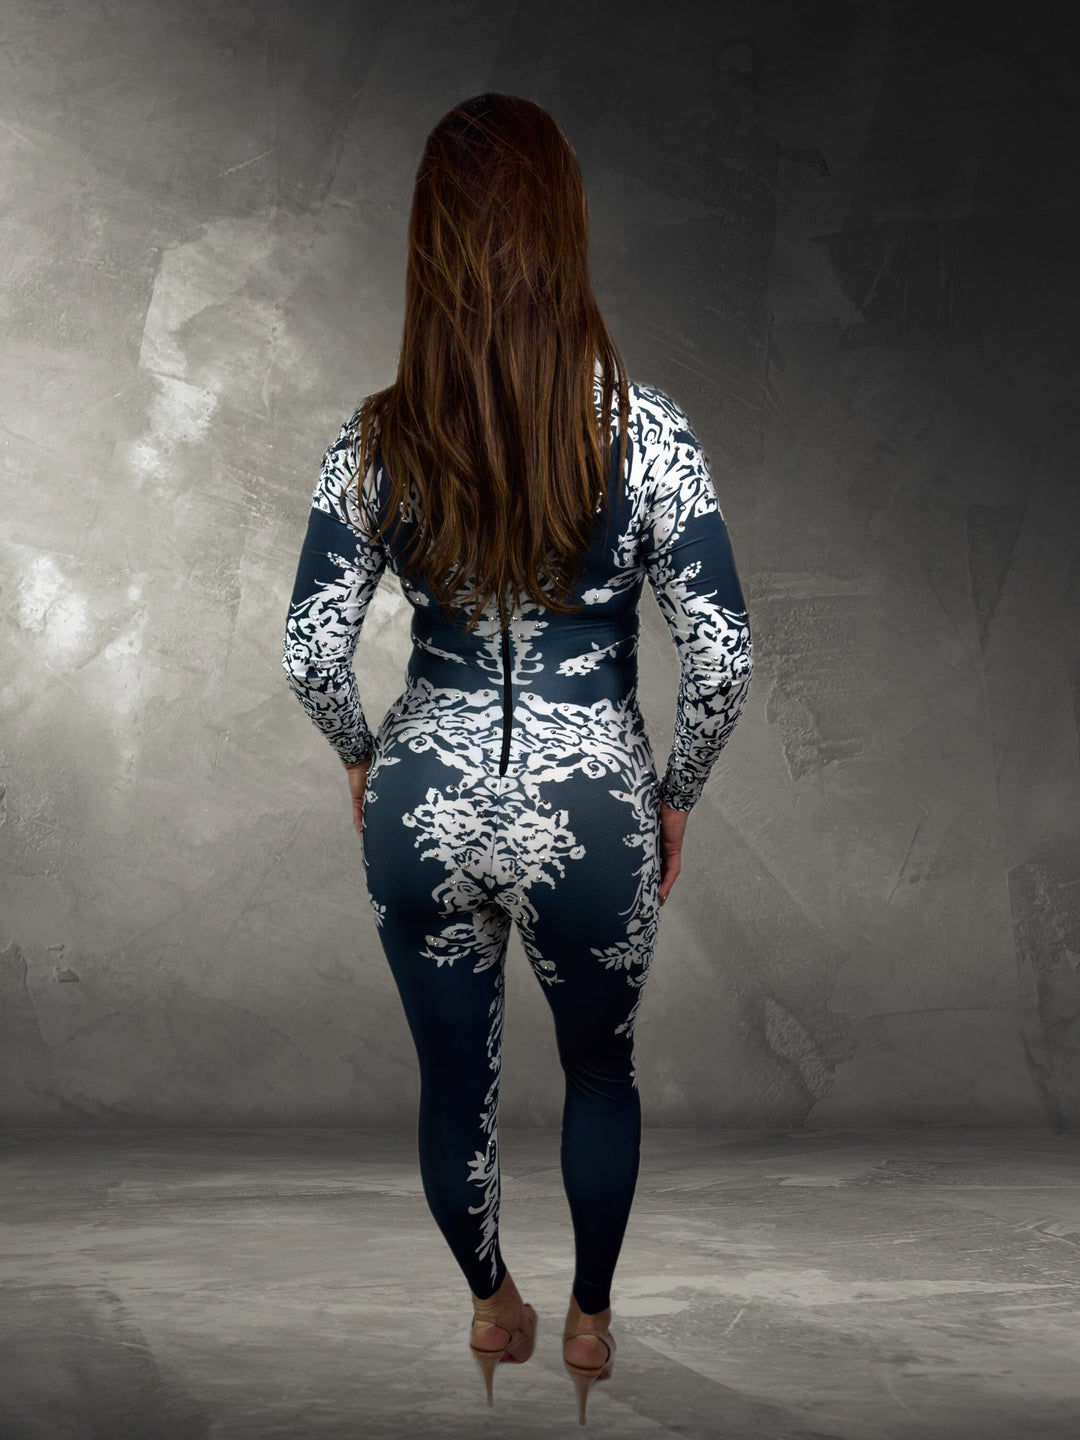 Deta Von Rhinestone Bodysuit / Black & White Diamond Catsuit / Crystal Festival Outfit / NYE Party Dress Burning Man Performer Costume